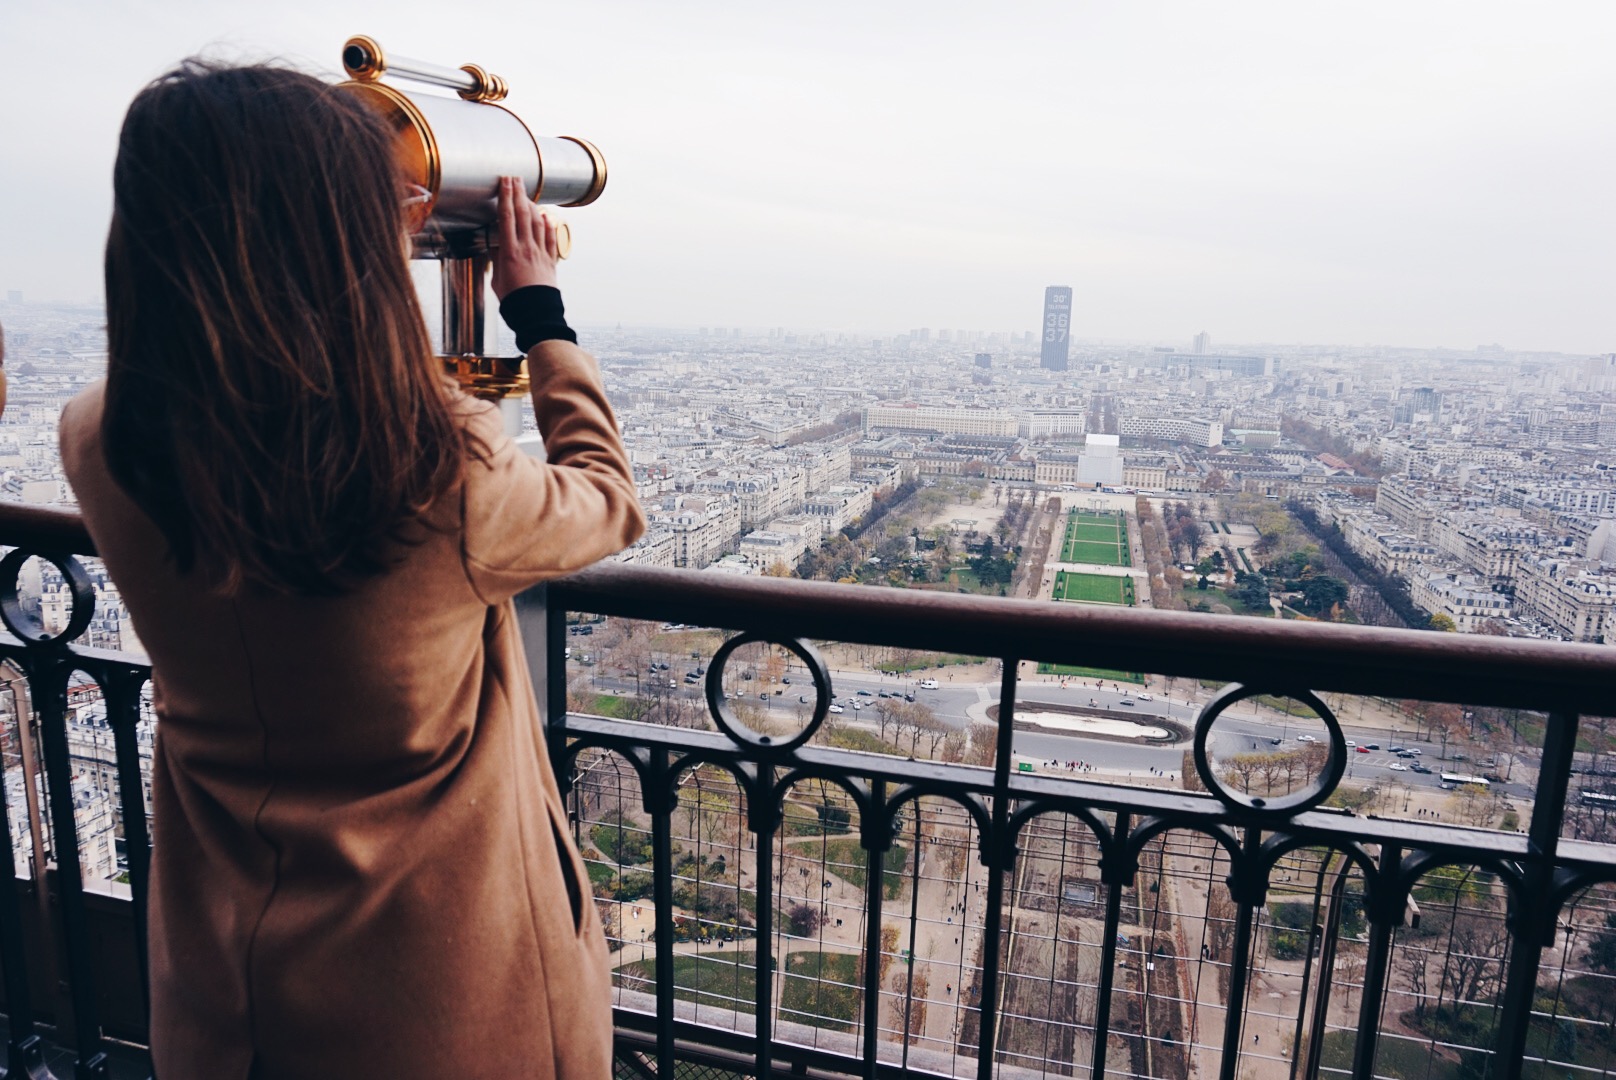 Student looks through viewfinder in Paris